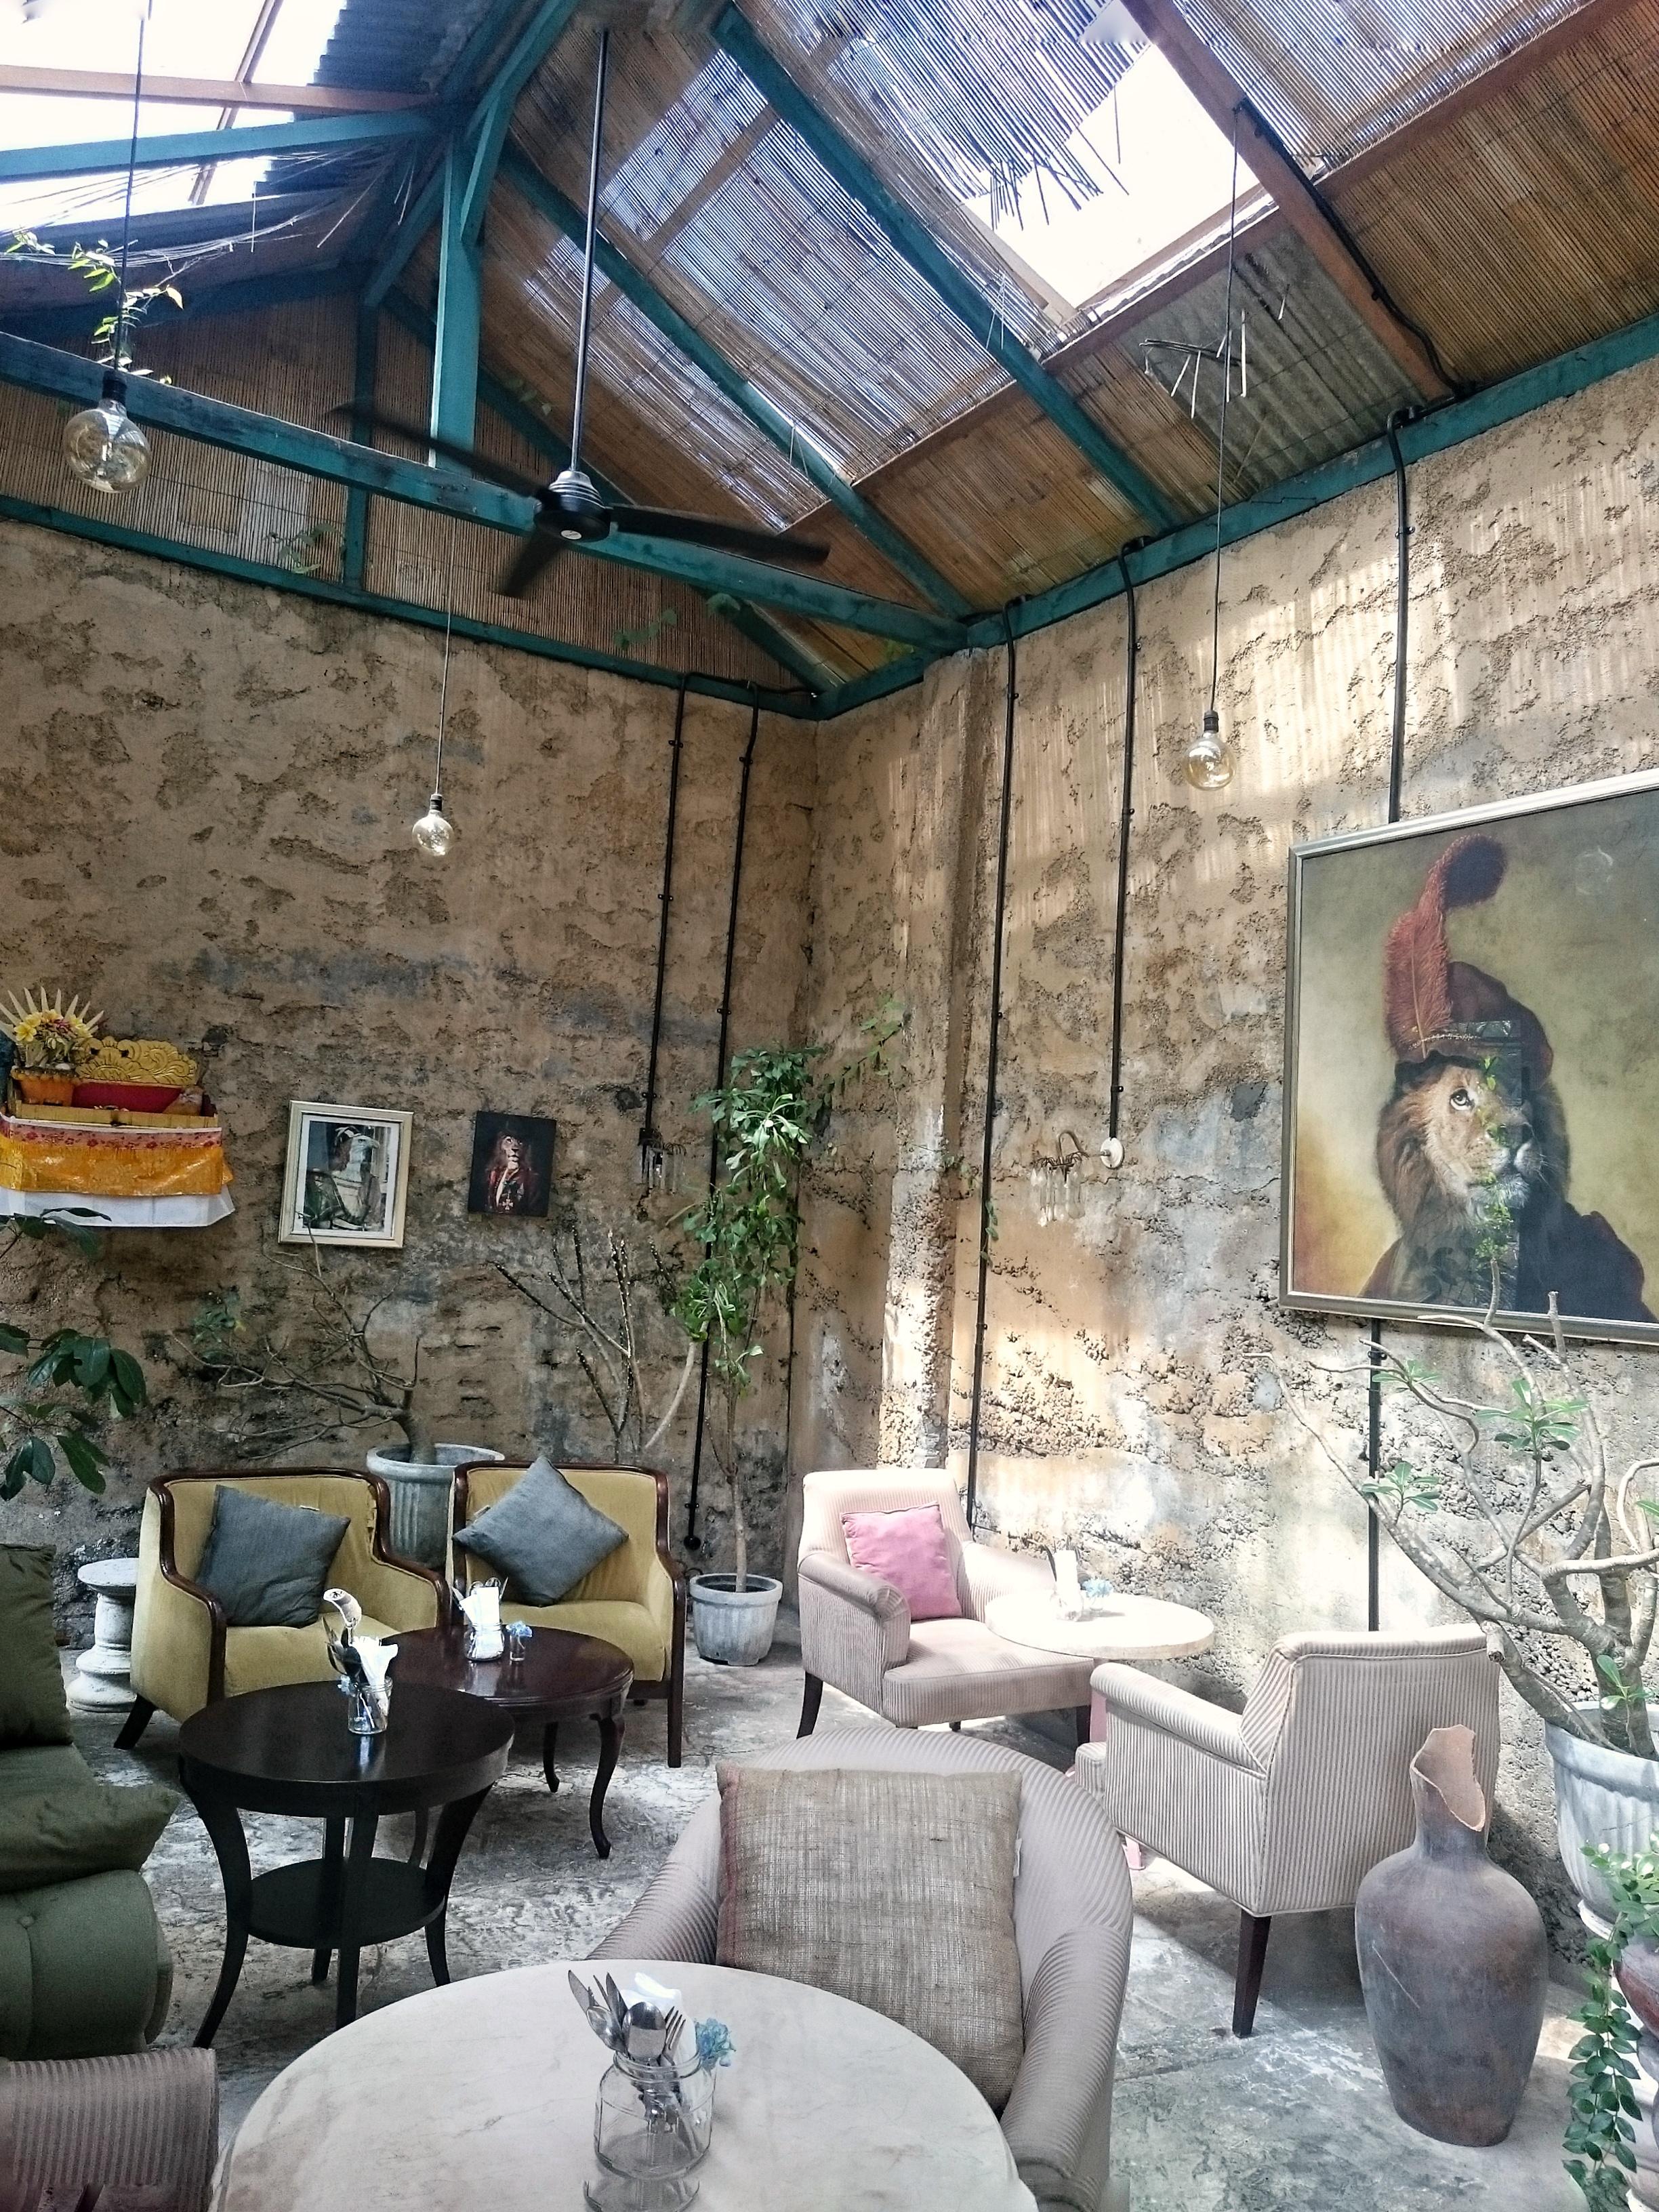 Stylisches Café in Ubud
#café #interiour #design #lazycat